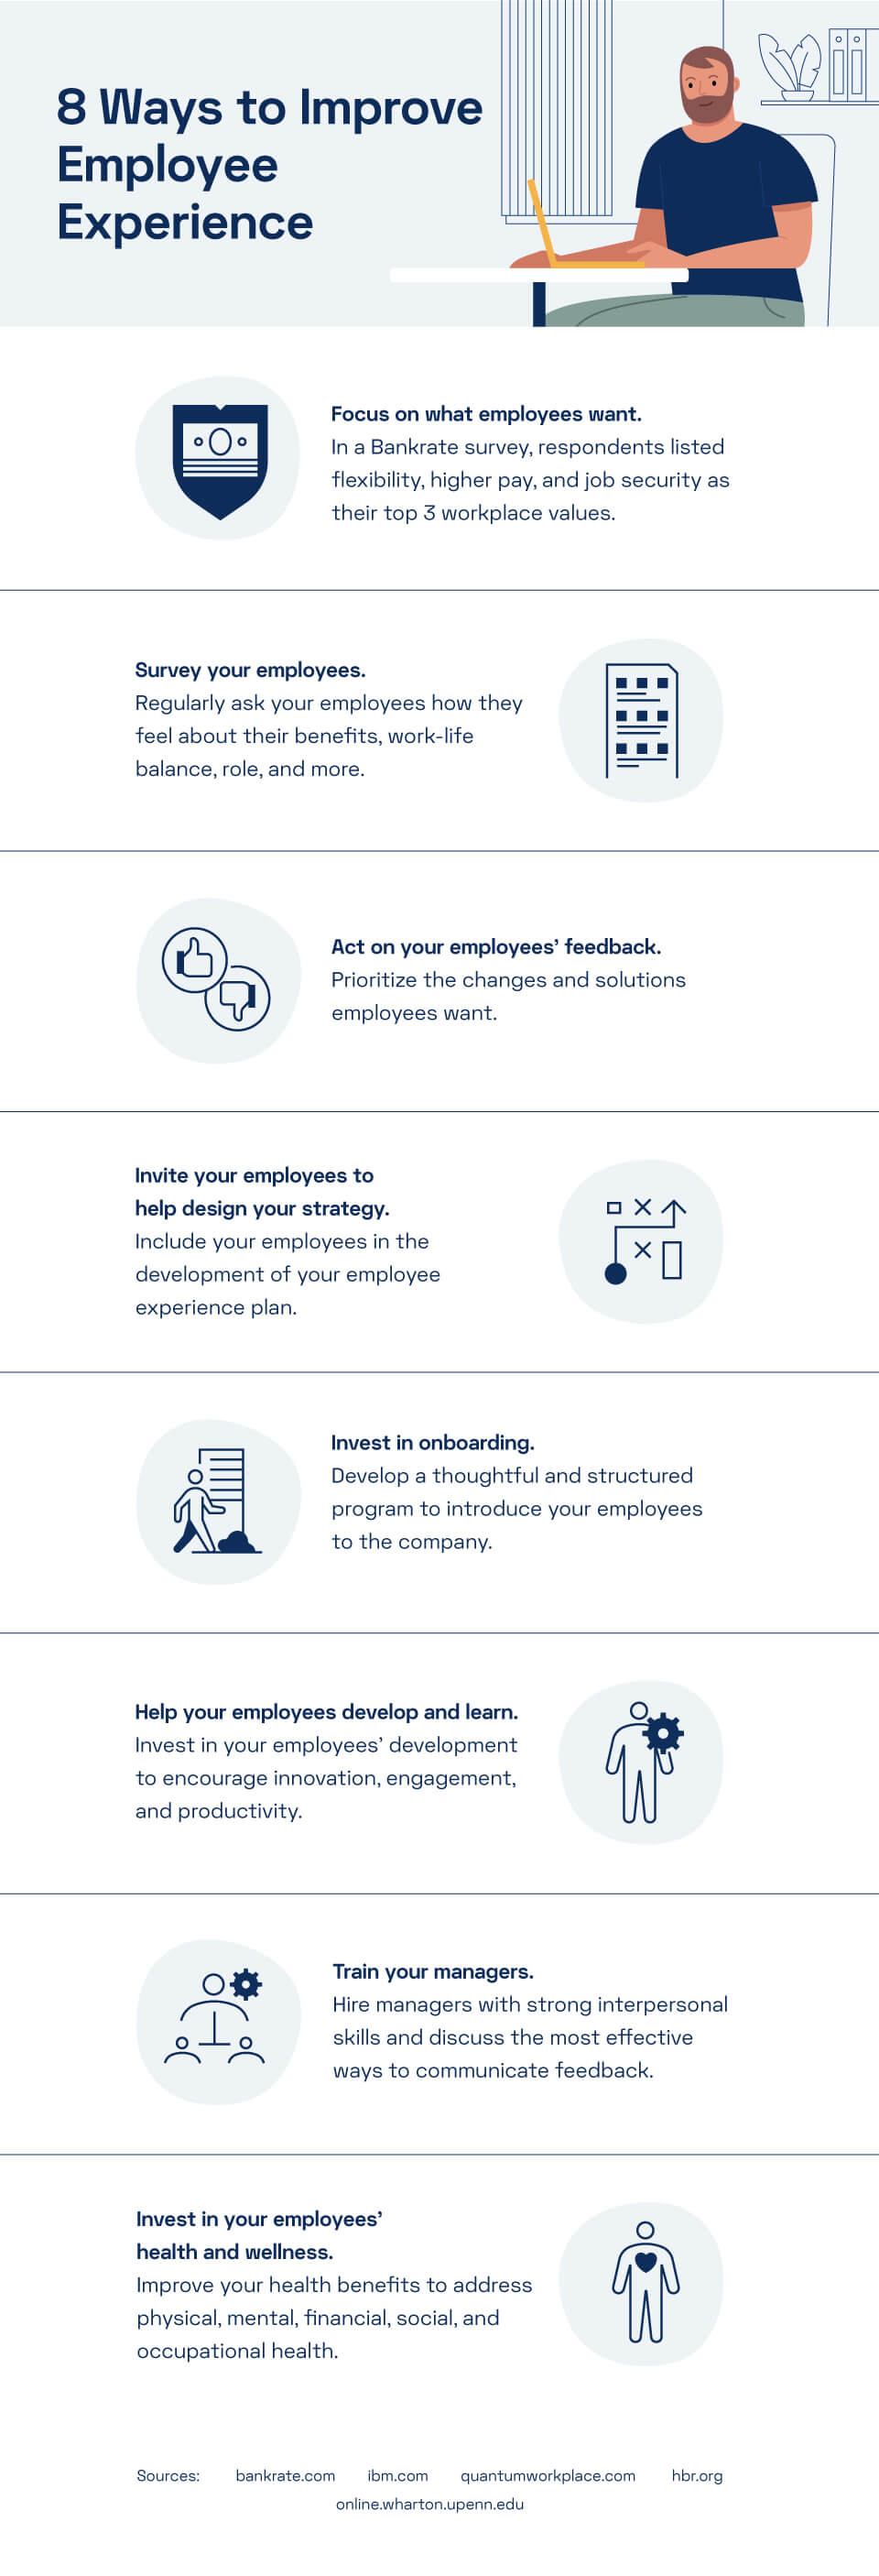 8 Ways to Improve Employee Experience